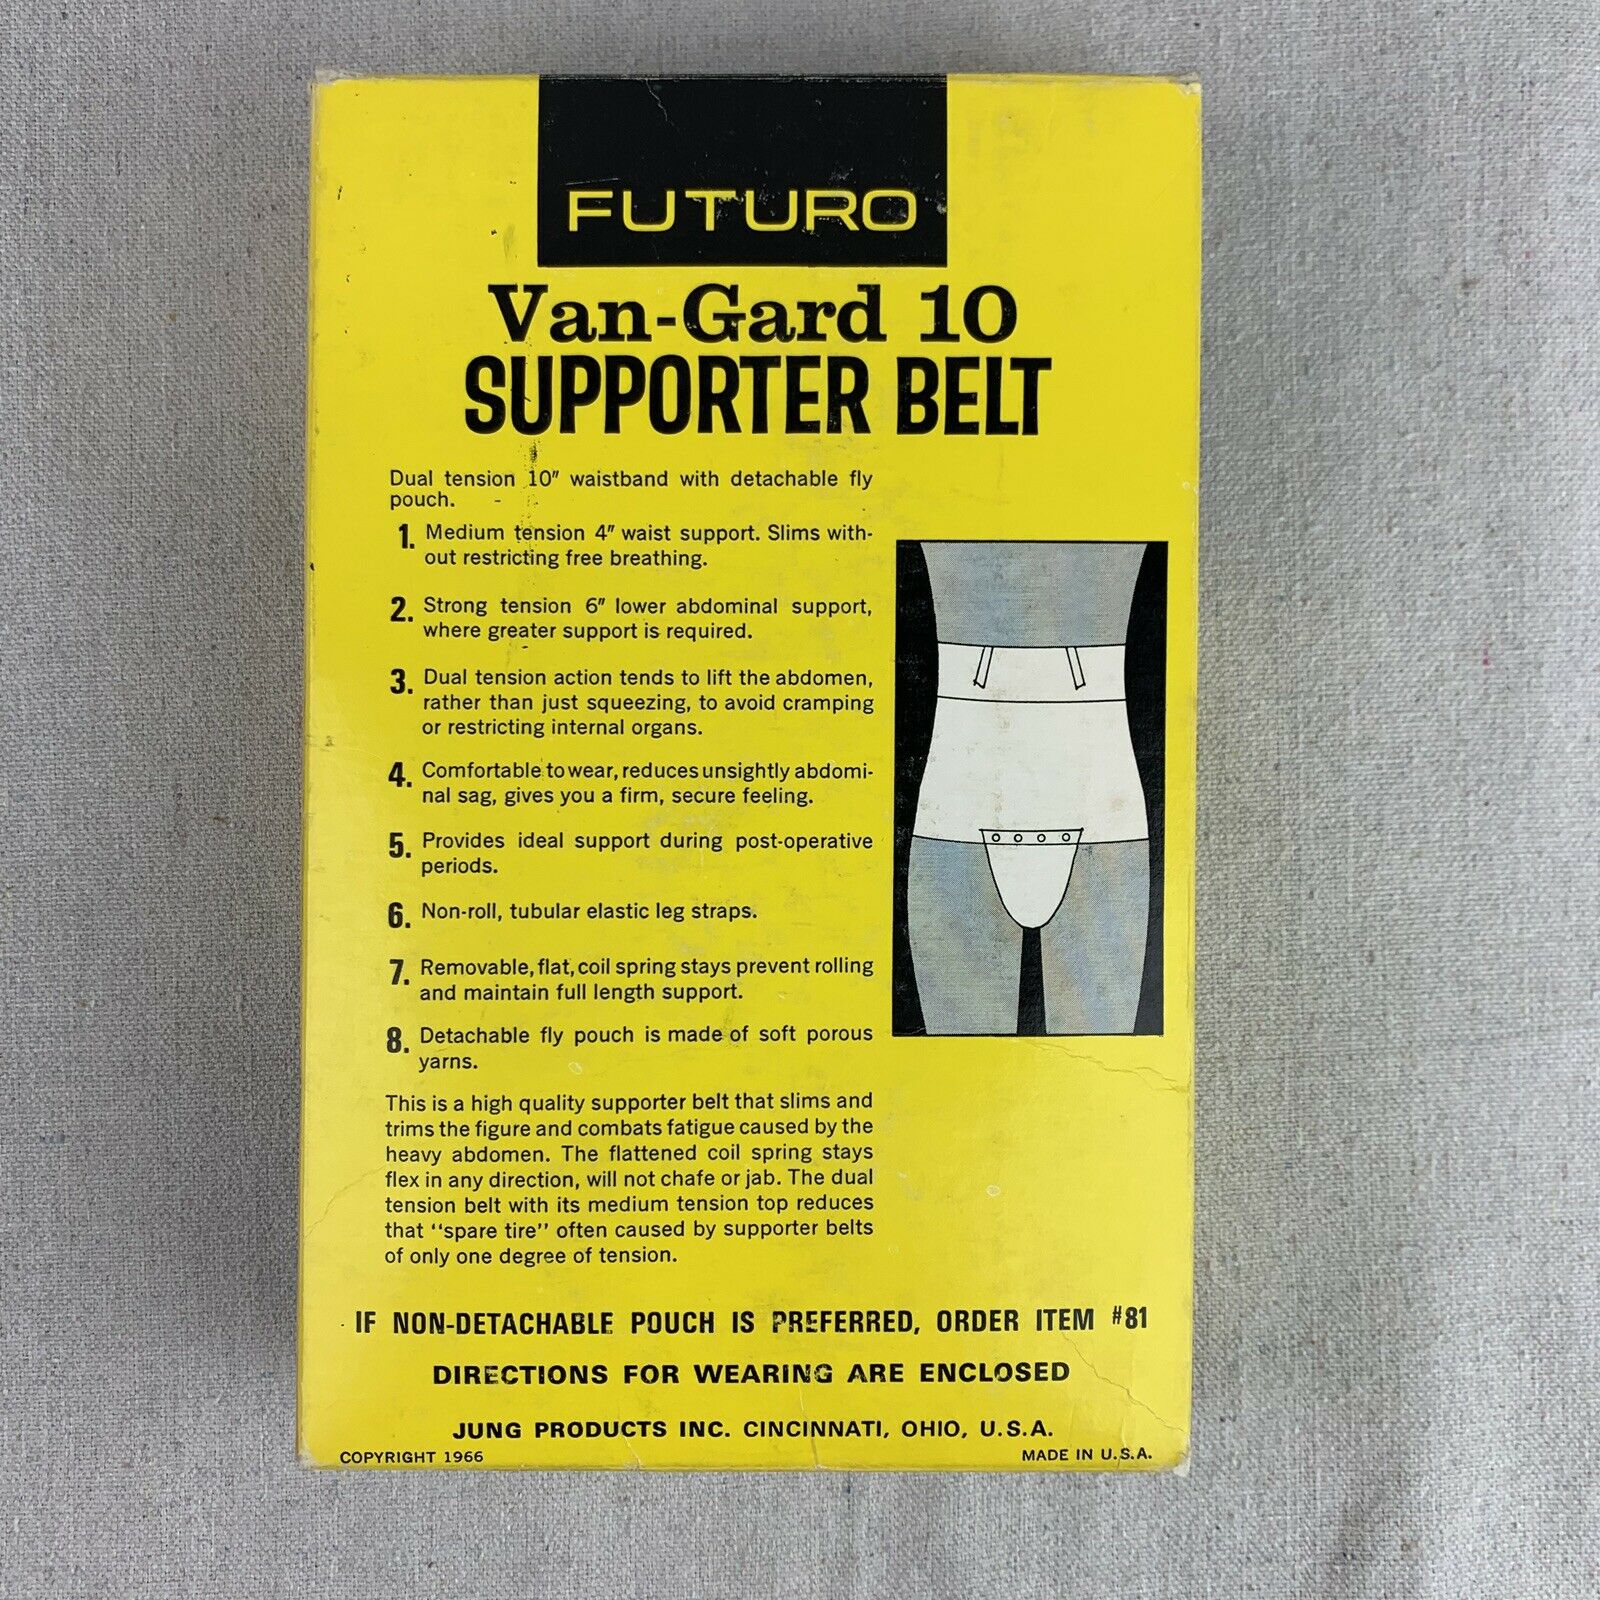 Futuro Van-Gard 10 jock with extra pouch 2.jpg